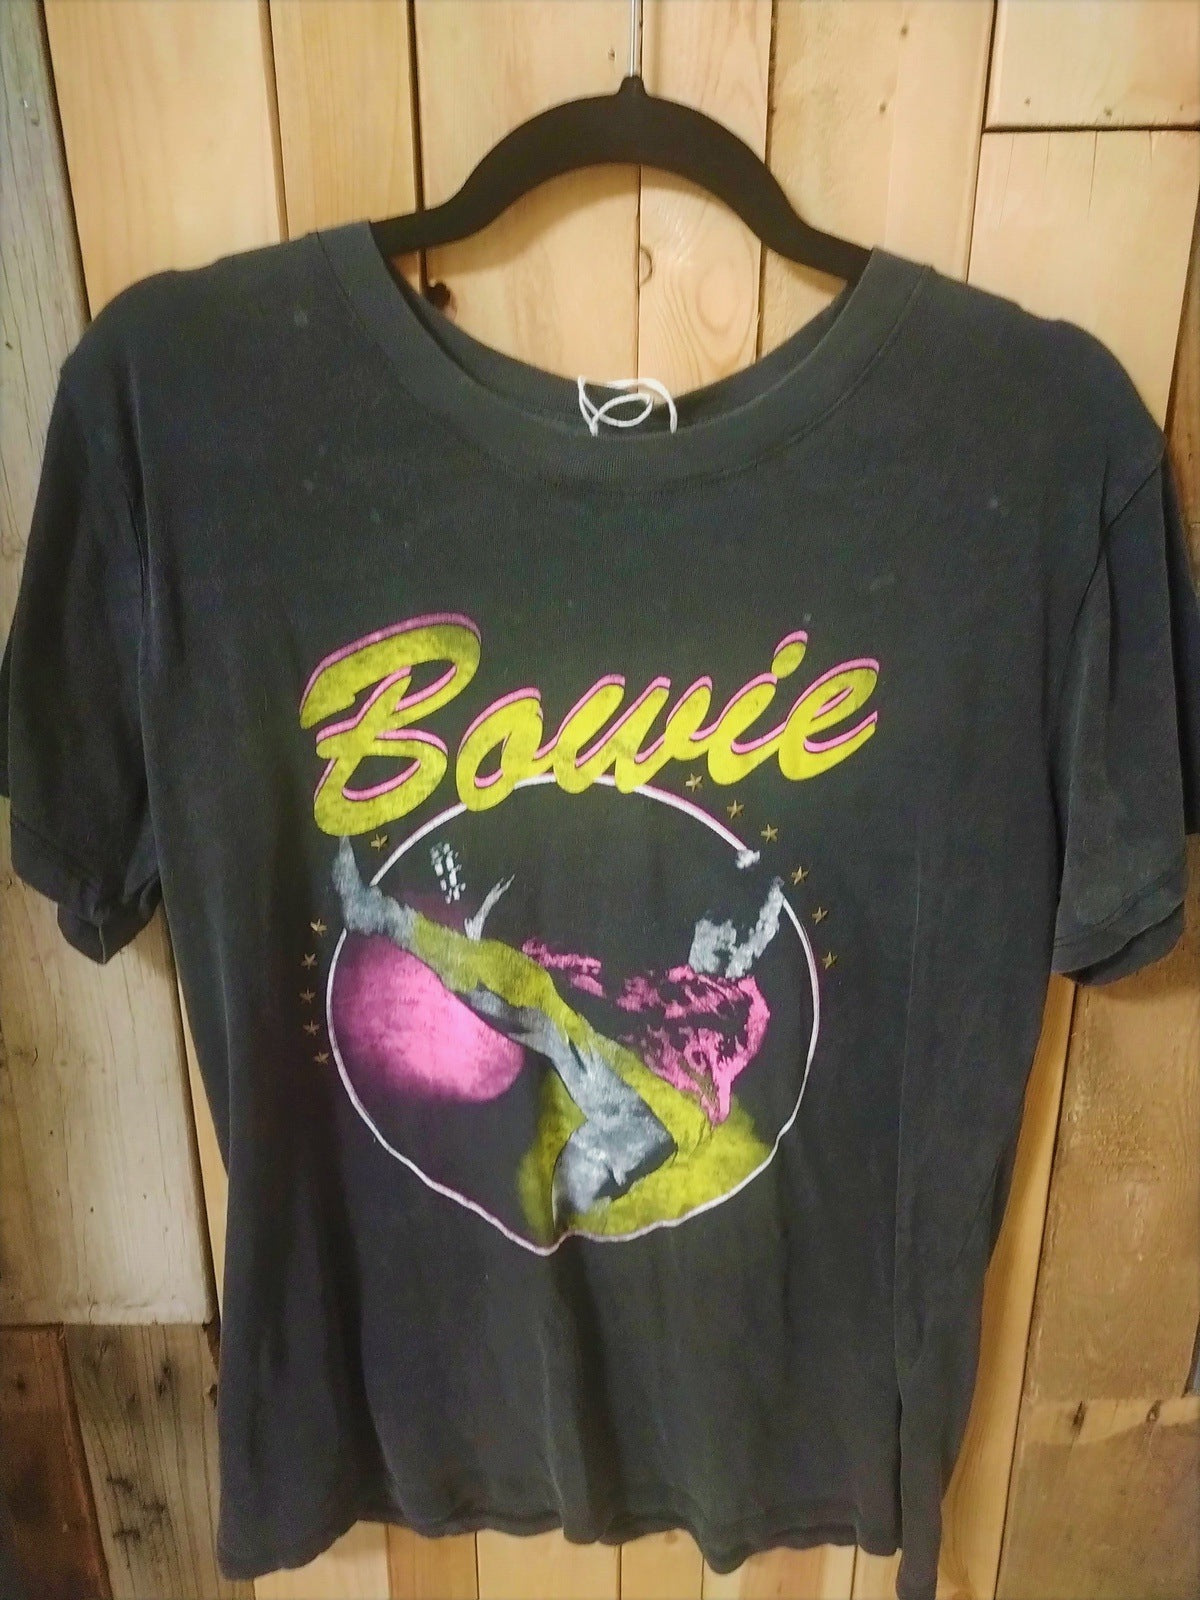 David Bowie Tee Shirt Size Medium